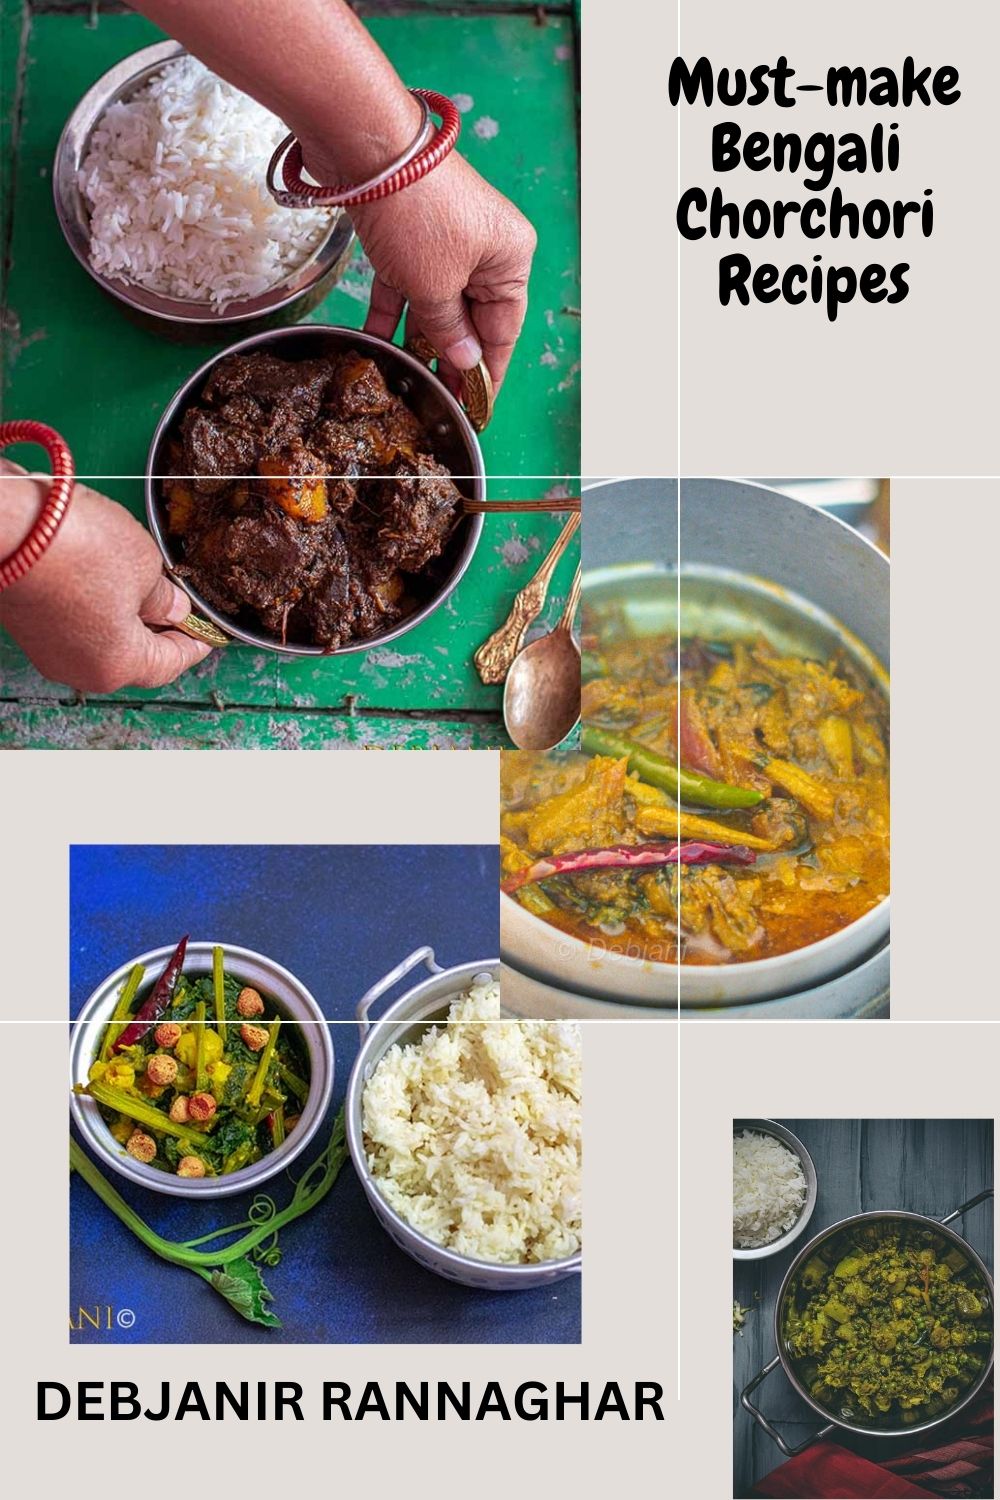 %Must-make bengali chorchori recipes Pinterest Pin